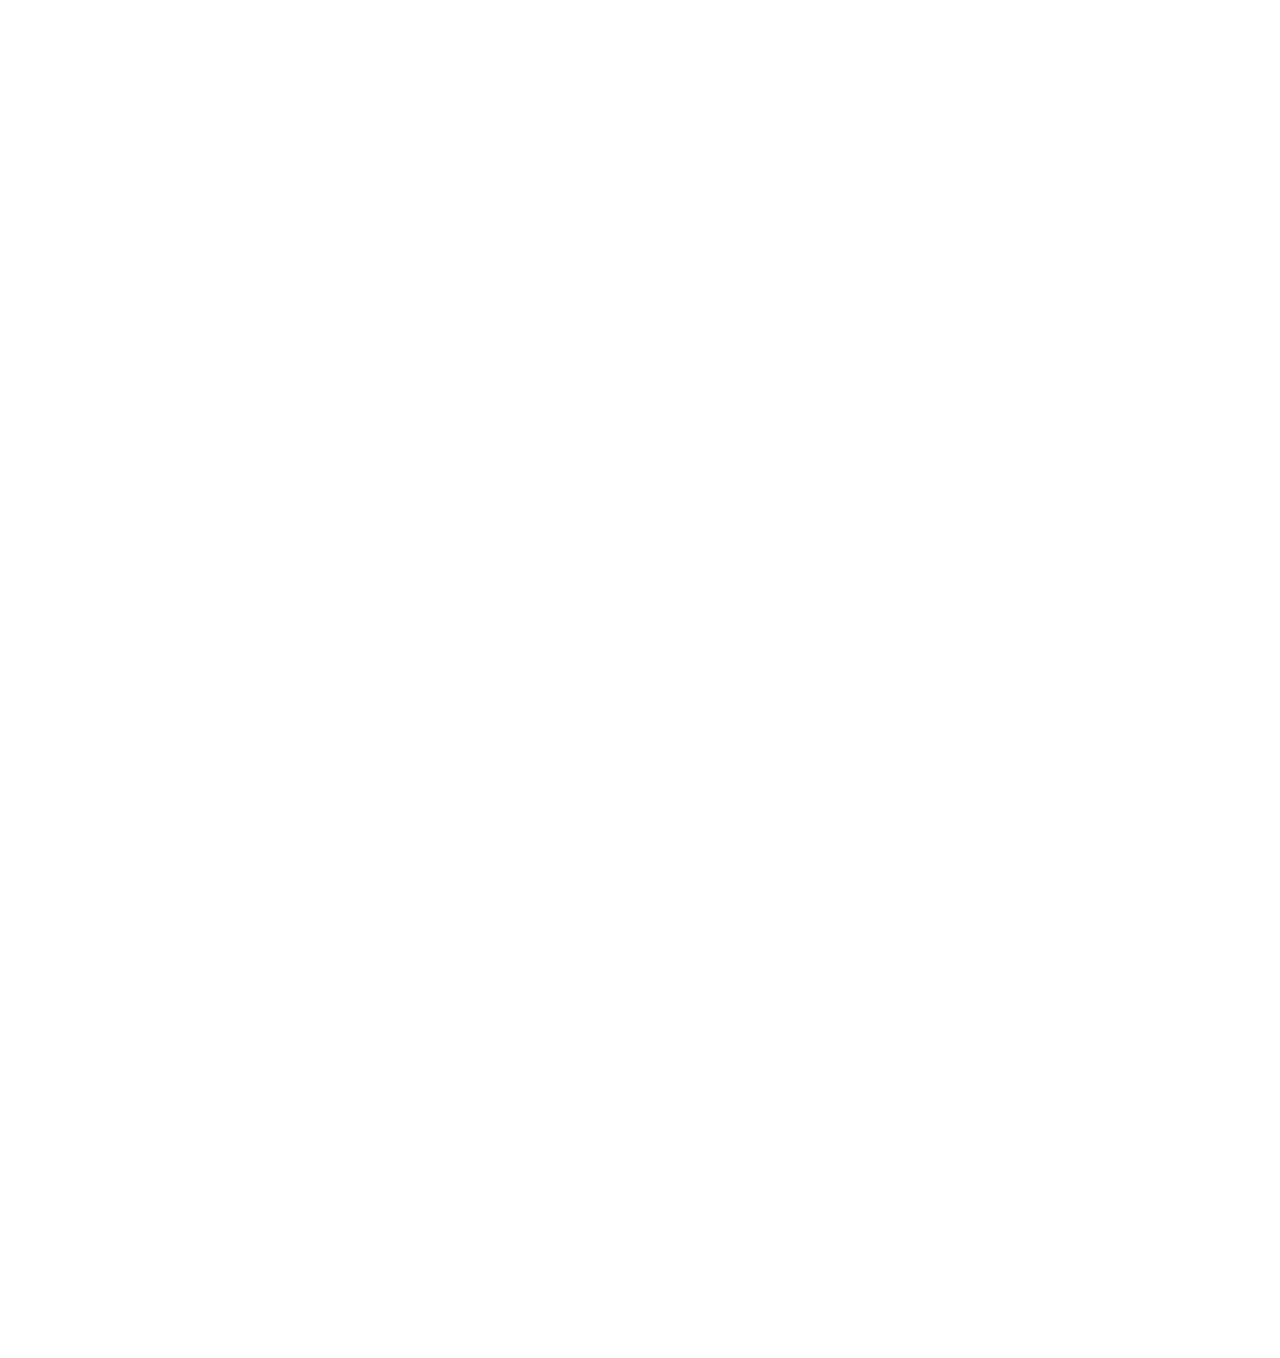 IDEAL's logo